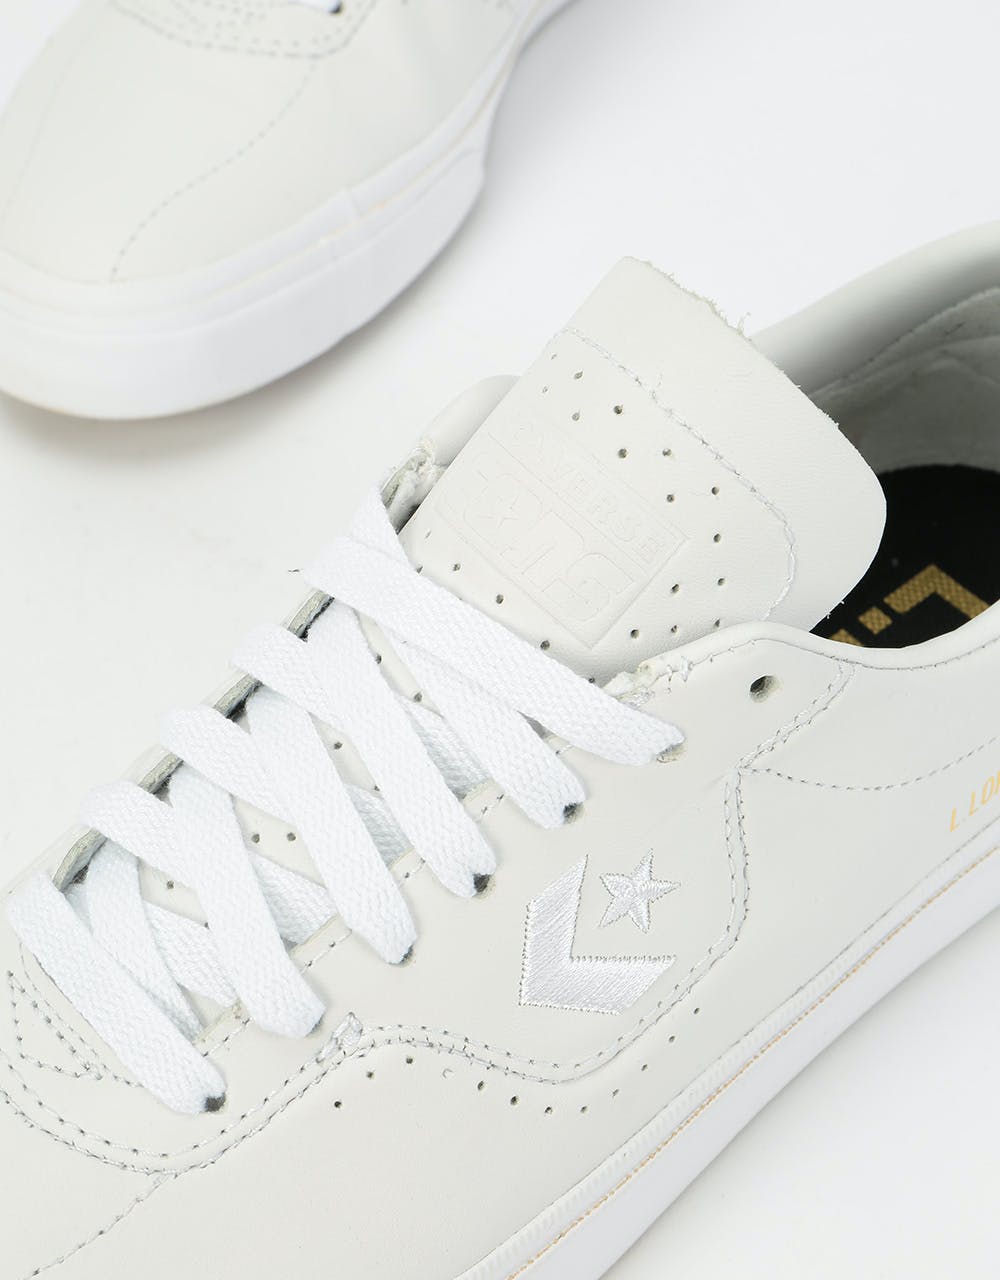 Converse Louie Lopez Pro Ox Leather Skate Shoes - White/White/White